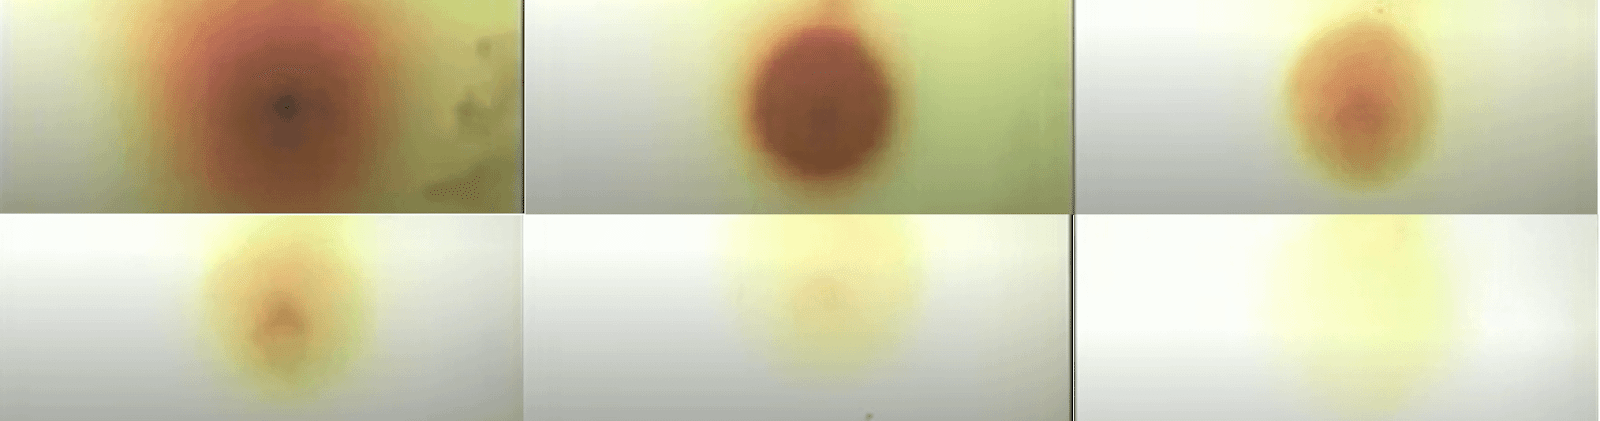 r/UFOB - Kingfish nuclear shot X-Ray of fireball